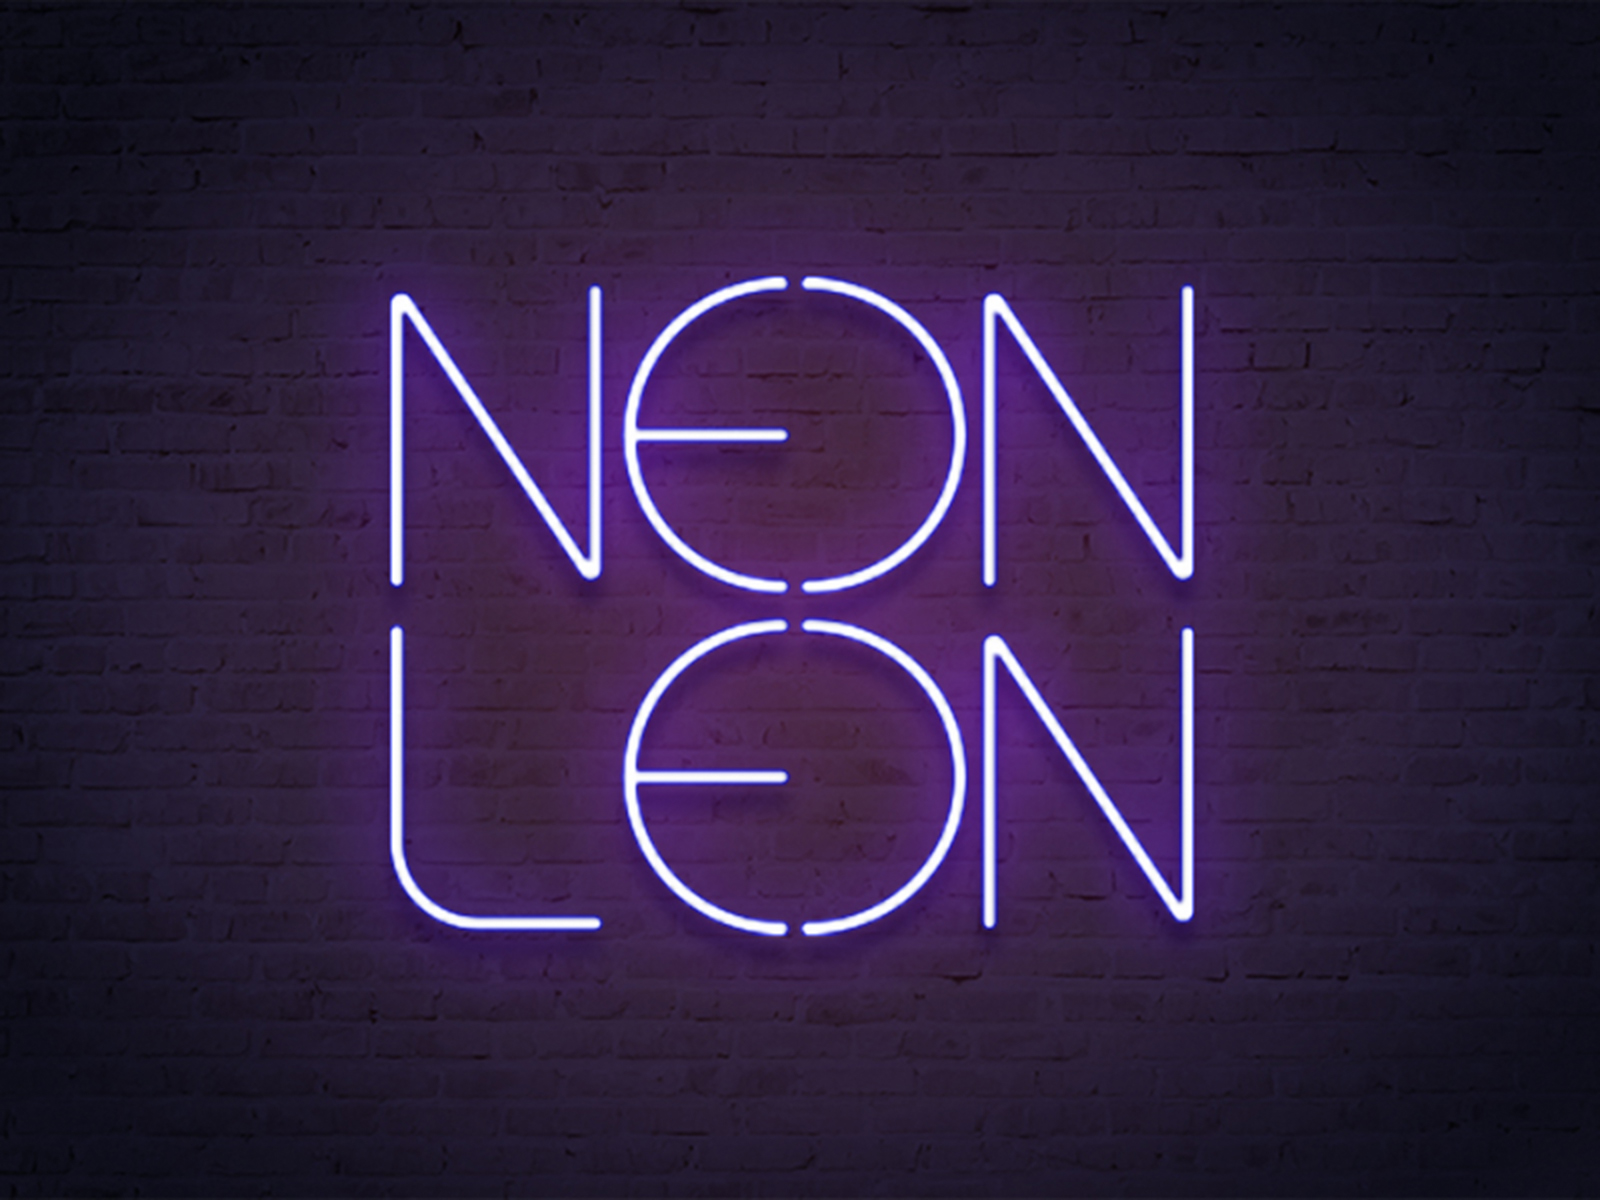 Neon Leon by Robert W. Williams | Oroboros LLC on Dribbble